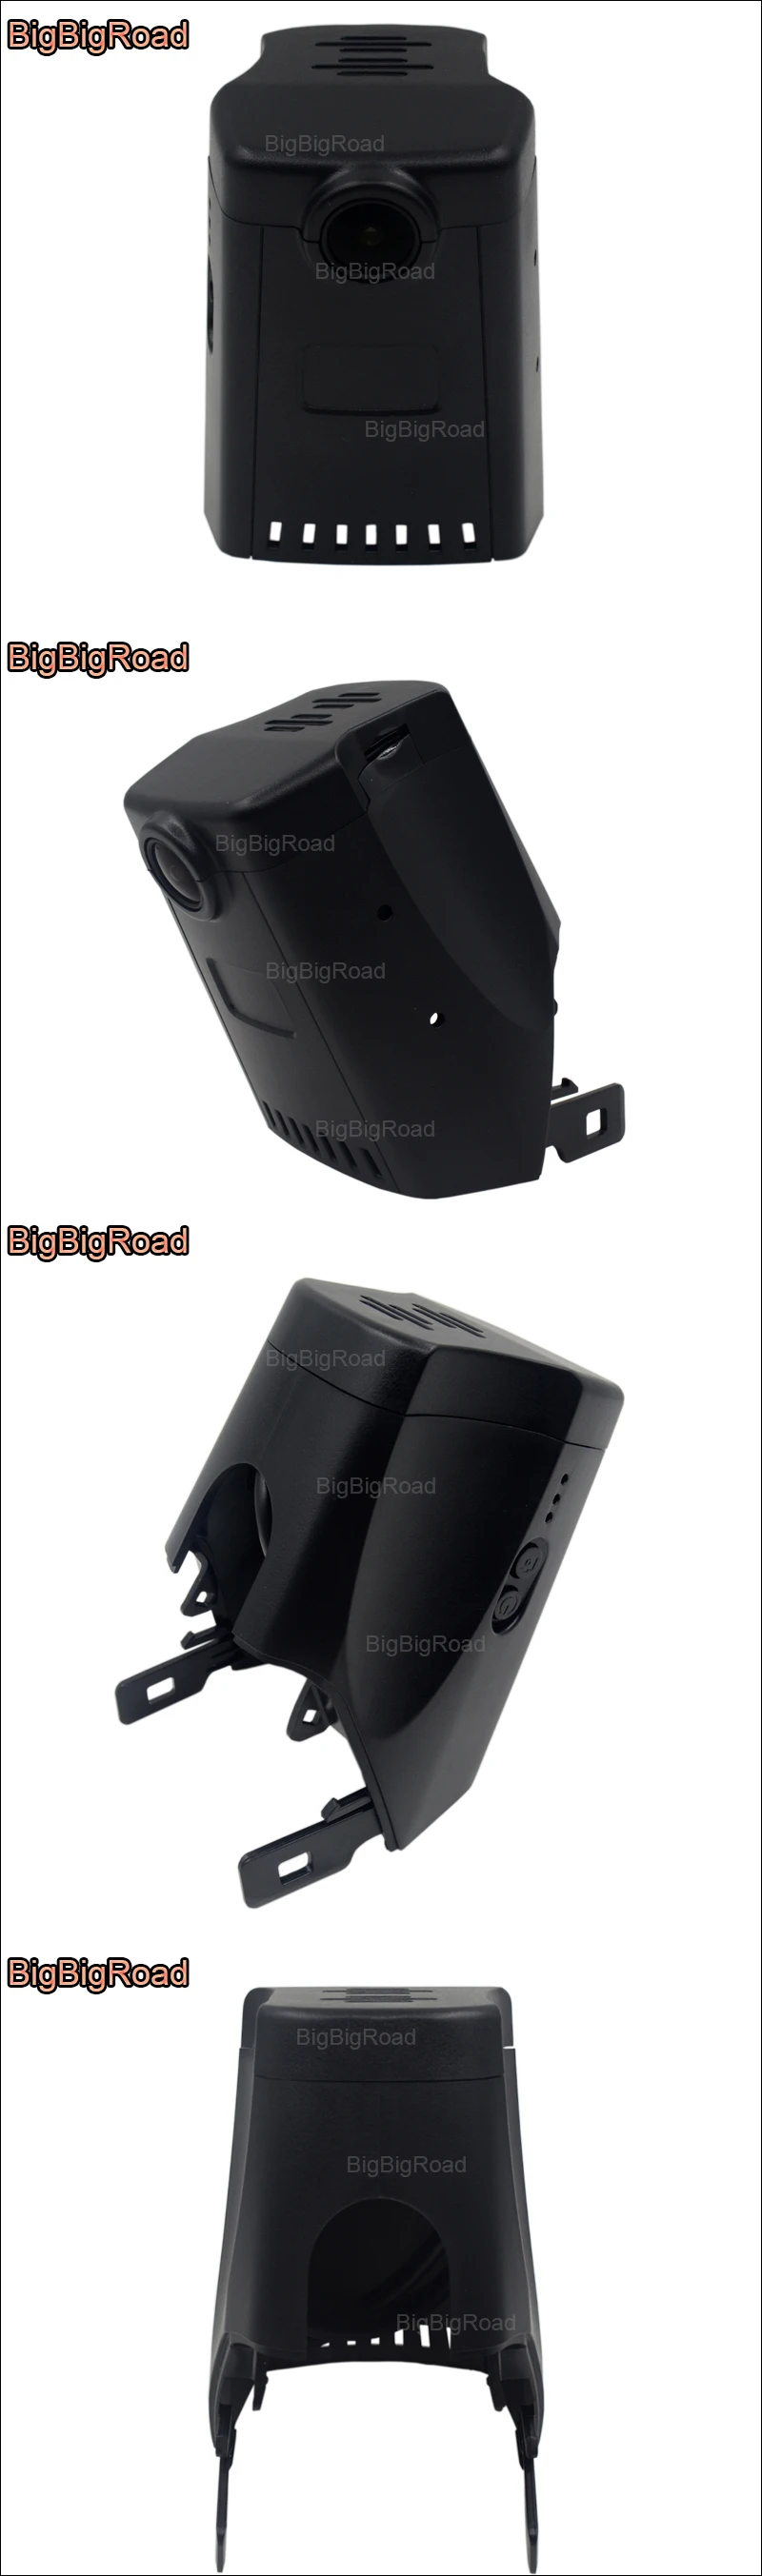 BigBigRoad For BMW 5 series 528Li 530Li 540Li low configuration Car wifi DVR Video Recorder Car black box dashcam night vision (7)